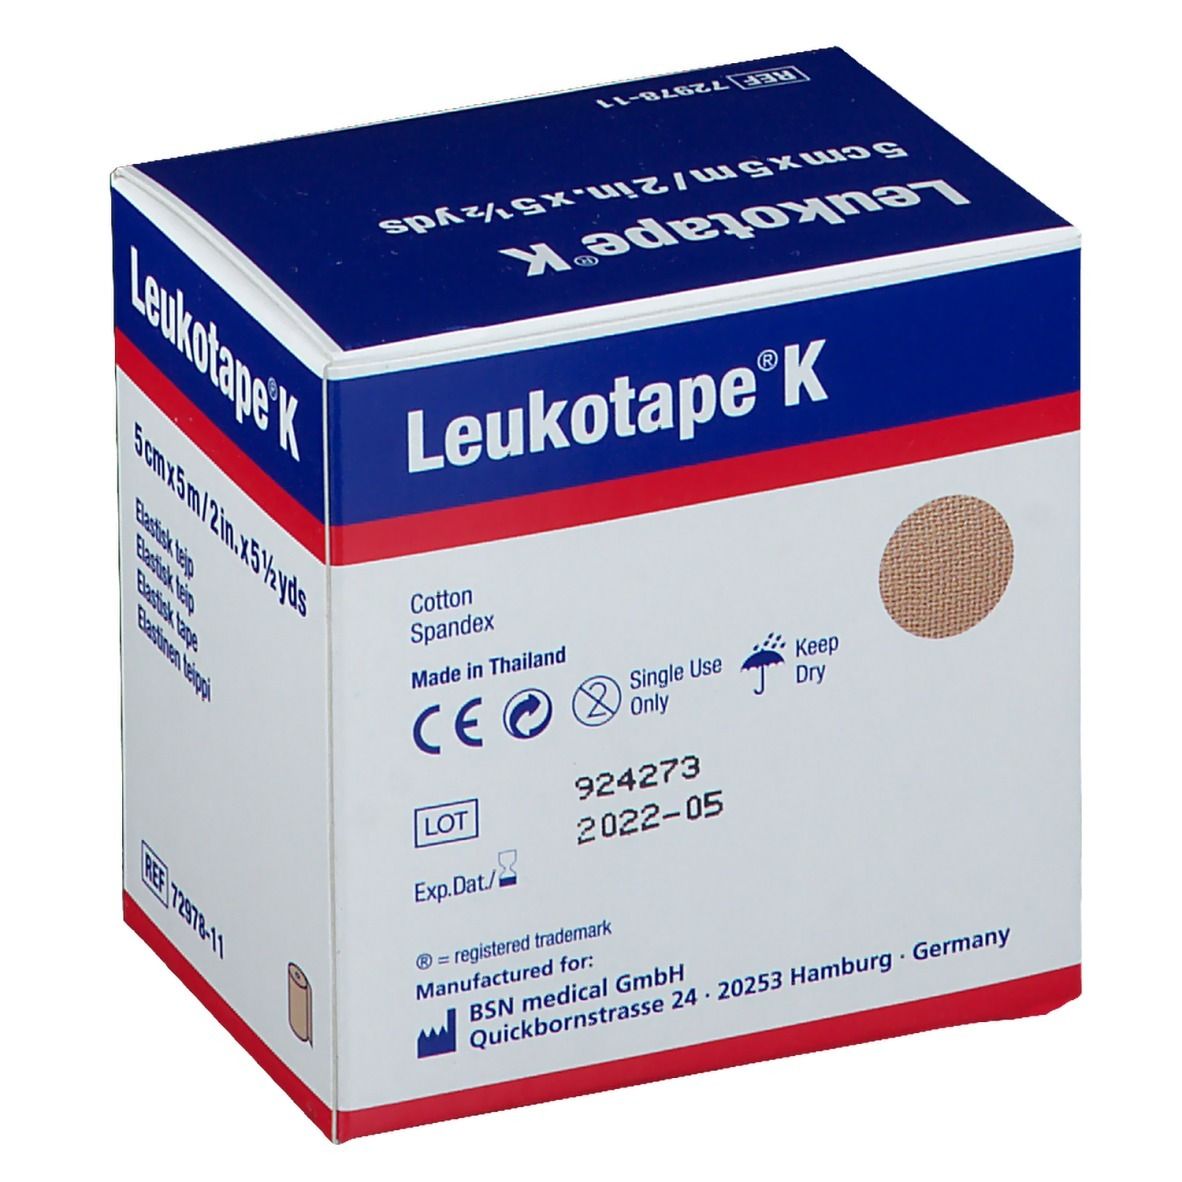 Leukotape® K 5 cm x 5 m hautfarbend